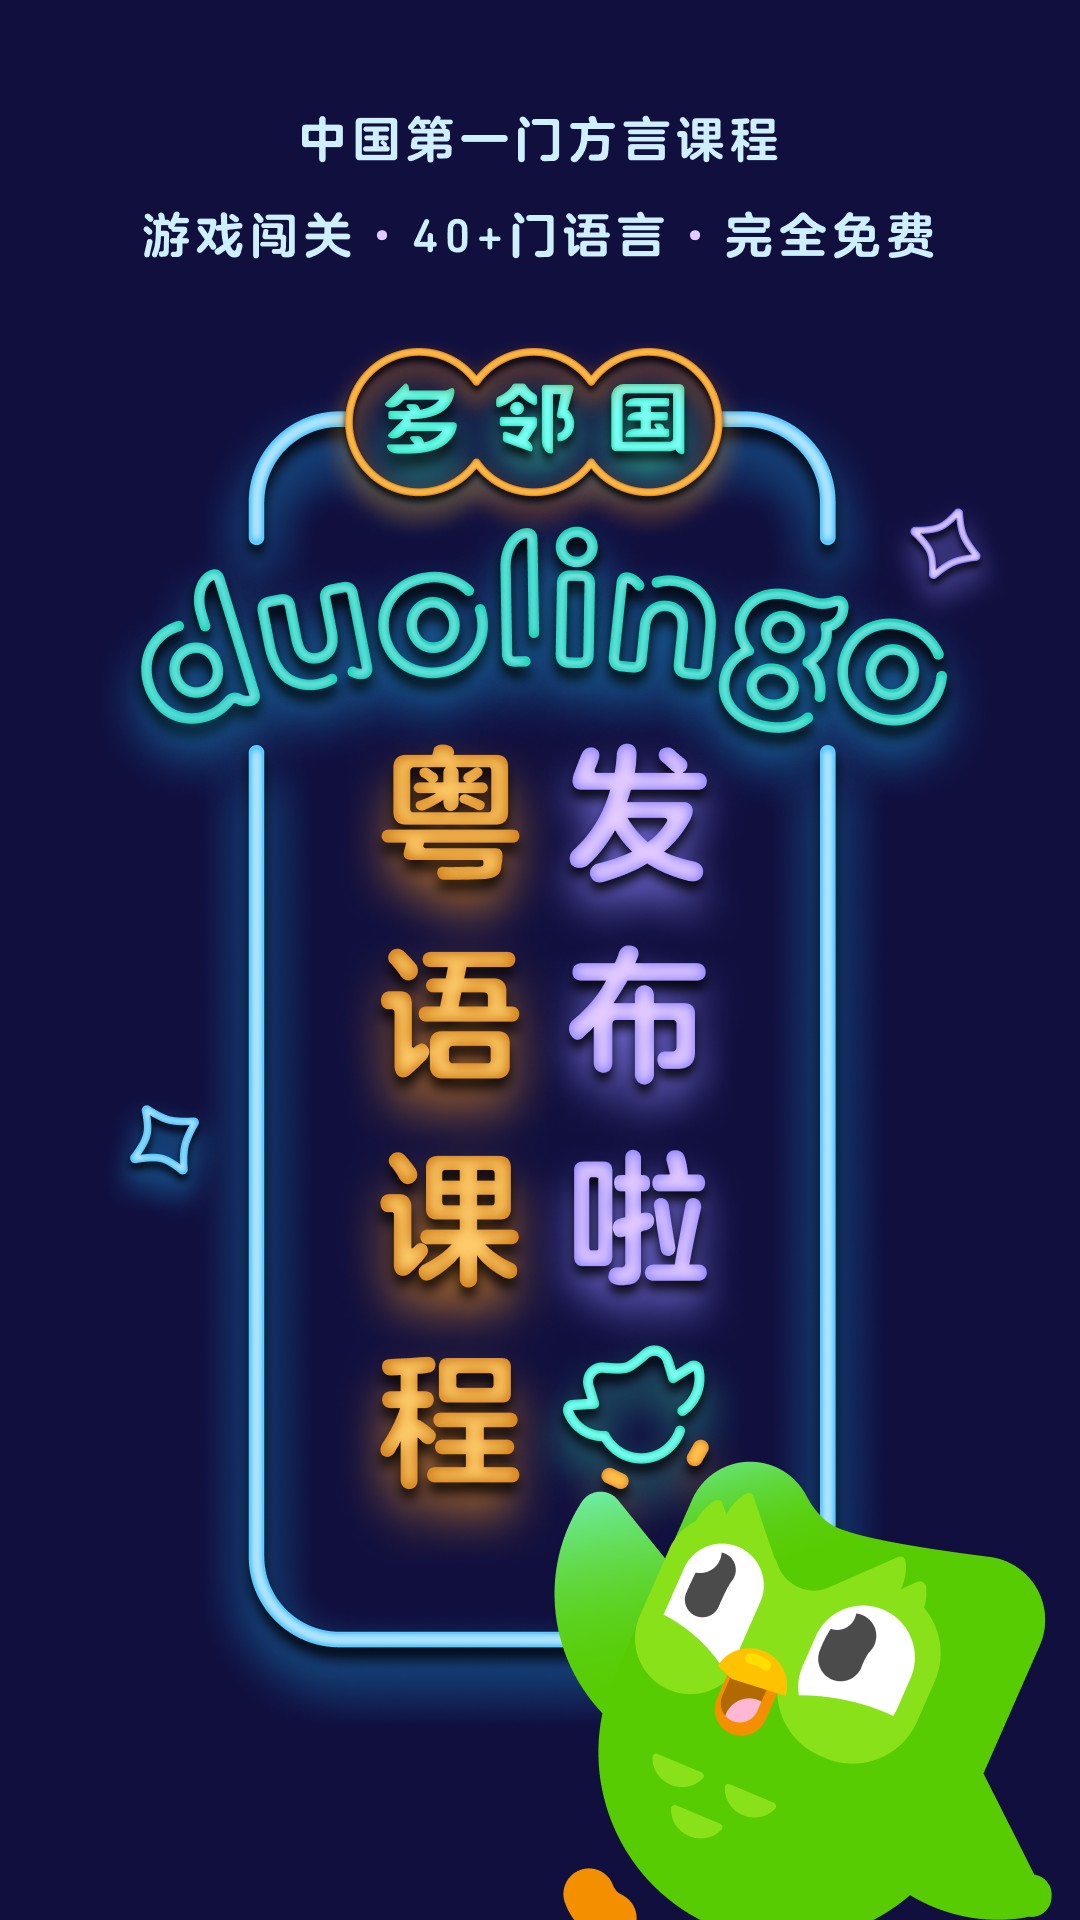 duolingoABC安卓版